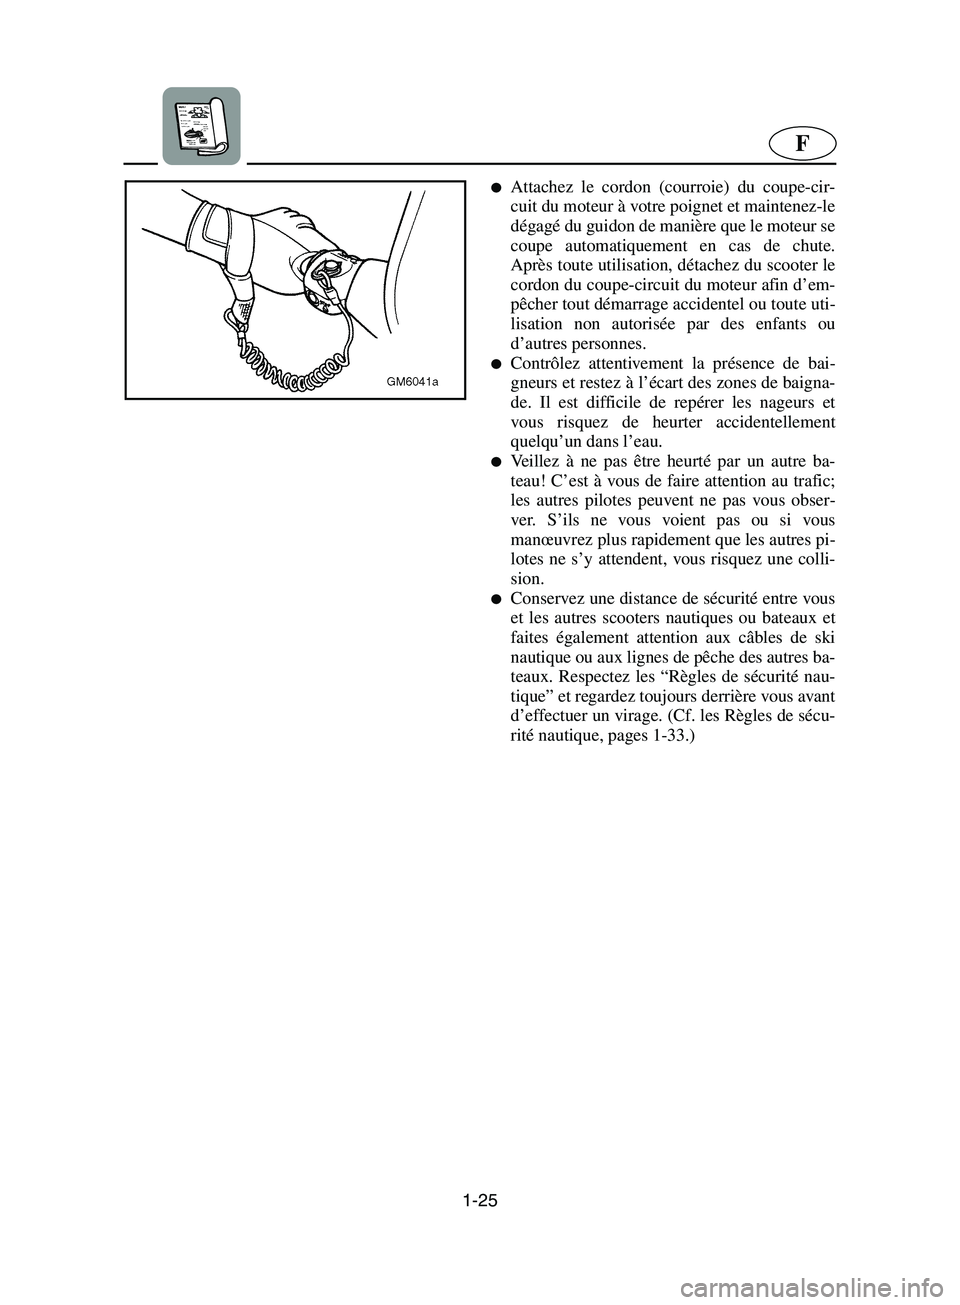 YAMAHA SUPERJET 2002  Manuale de Empleo (in Spanish) 1-25
F
Attachez le cordon (courroie) du coupe-cir-
cuit du moteur à votre poignet et maintenez-le
dégagé du guidon de manière que le moteur se
coupe automatiquement en cas de chute.
Après toute 